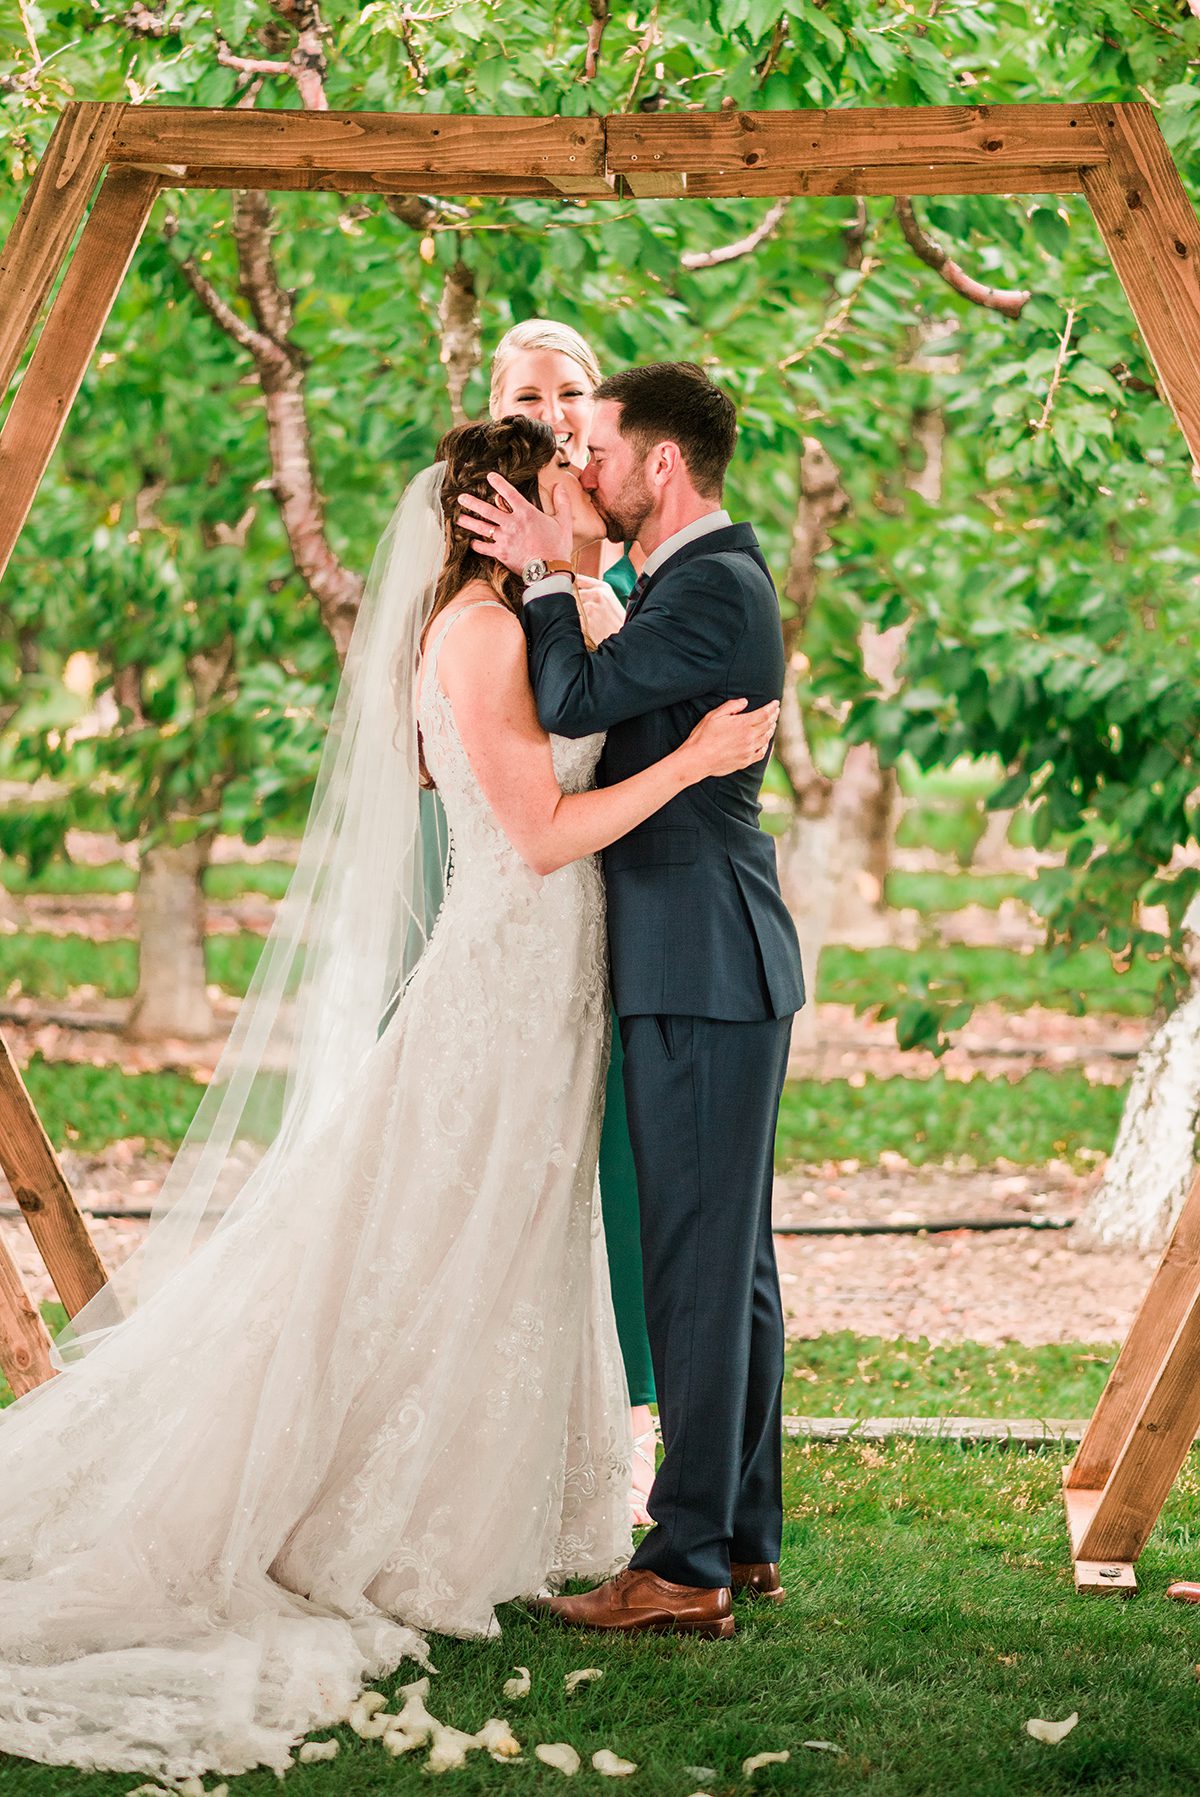 Kelsey & Michael | Wedding at Restoration Vineyards